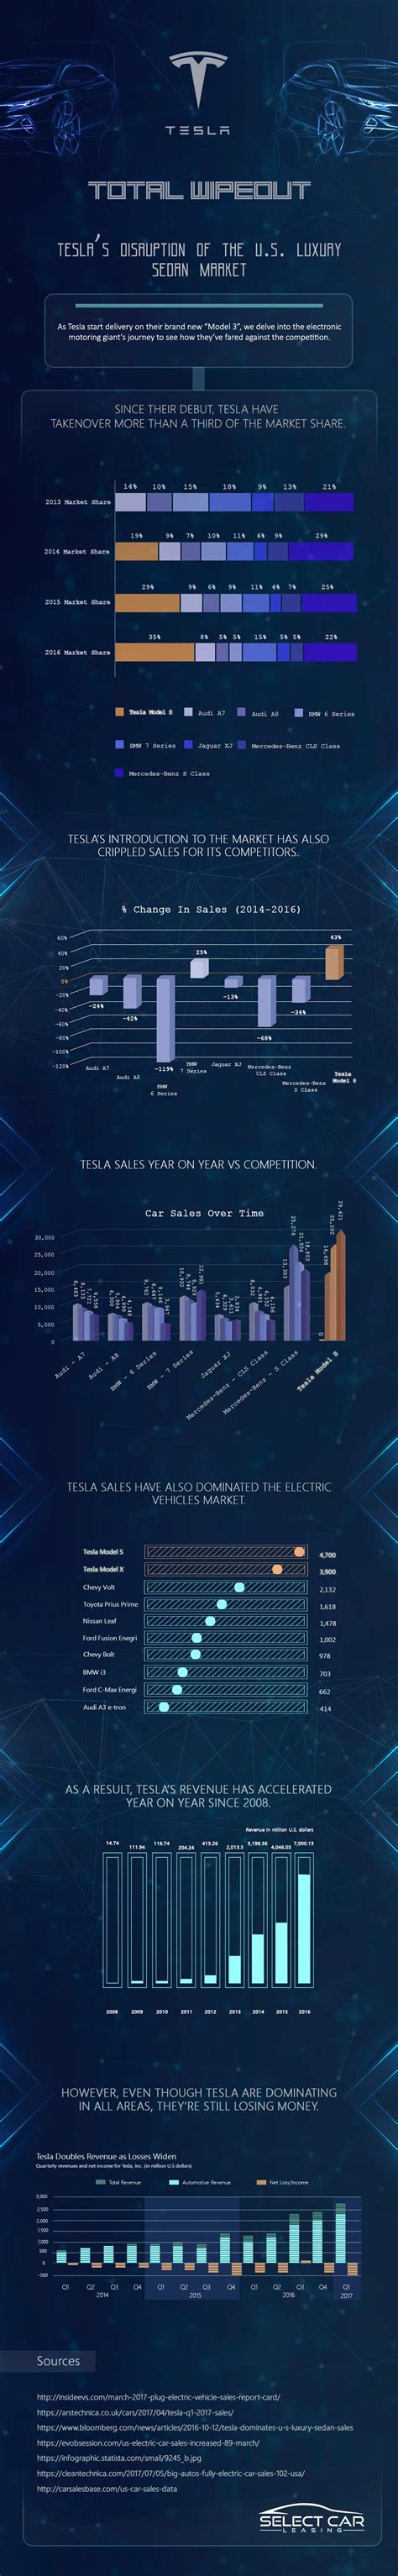 Tesla gains massive market share from competitors [Infographic] | EVANNEX Aftermarket Tesla ...